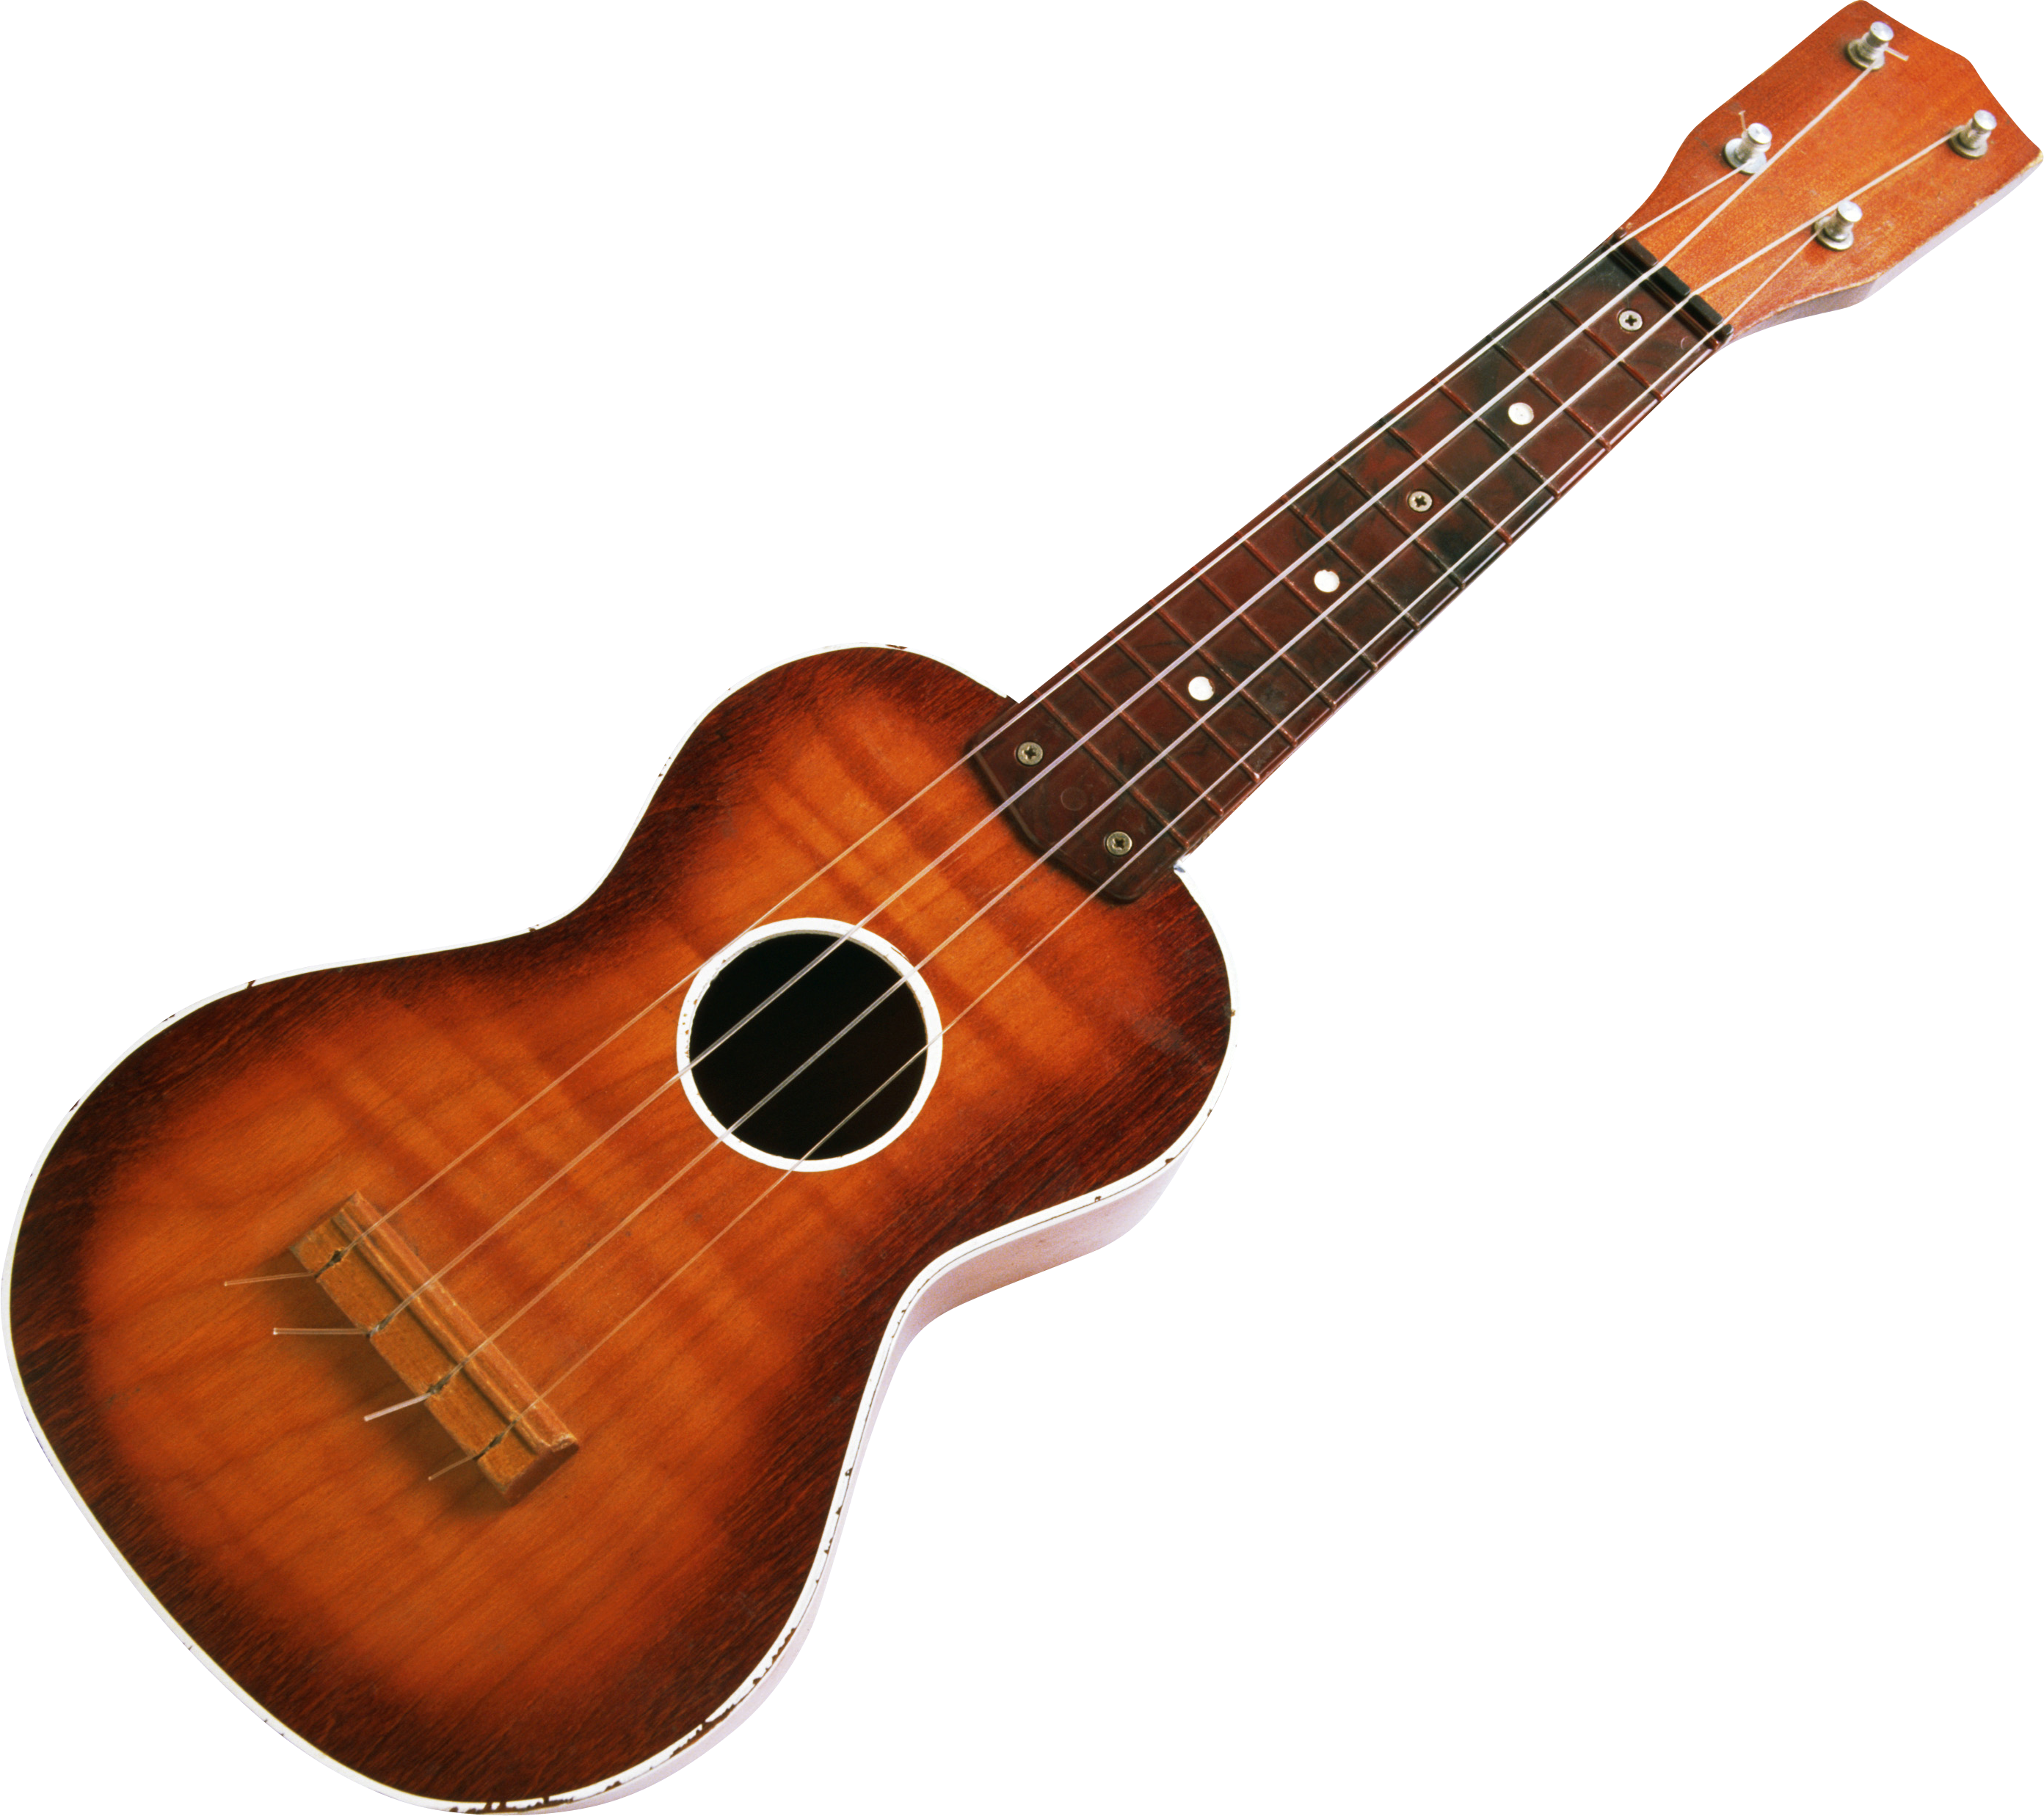 Guitar Acoustic Brown Download HQ PNG Image